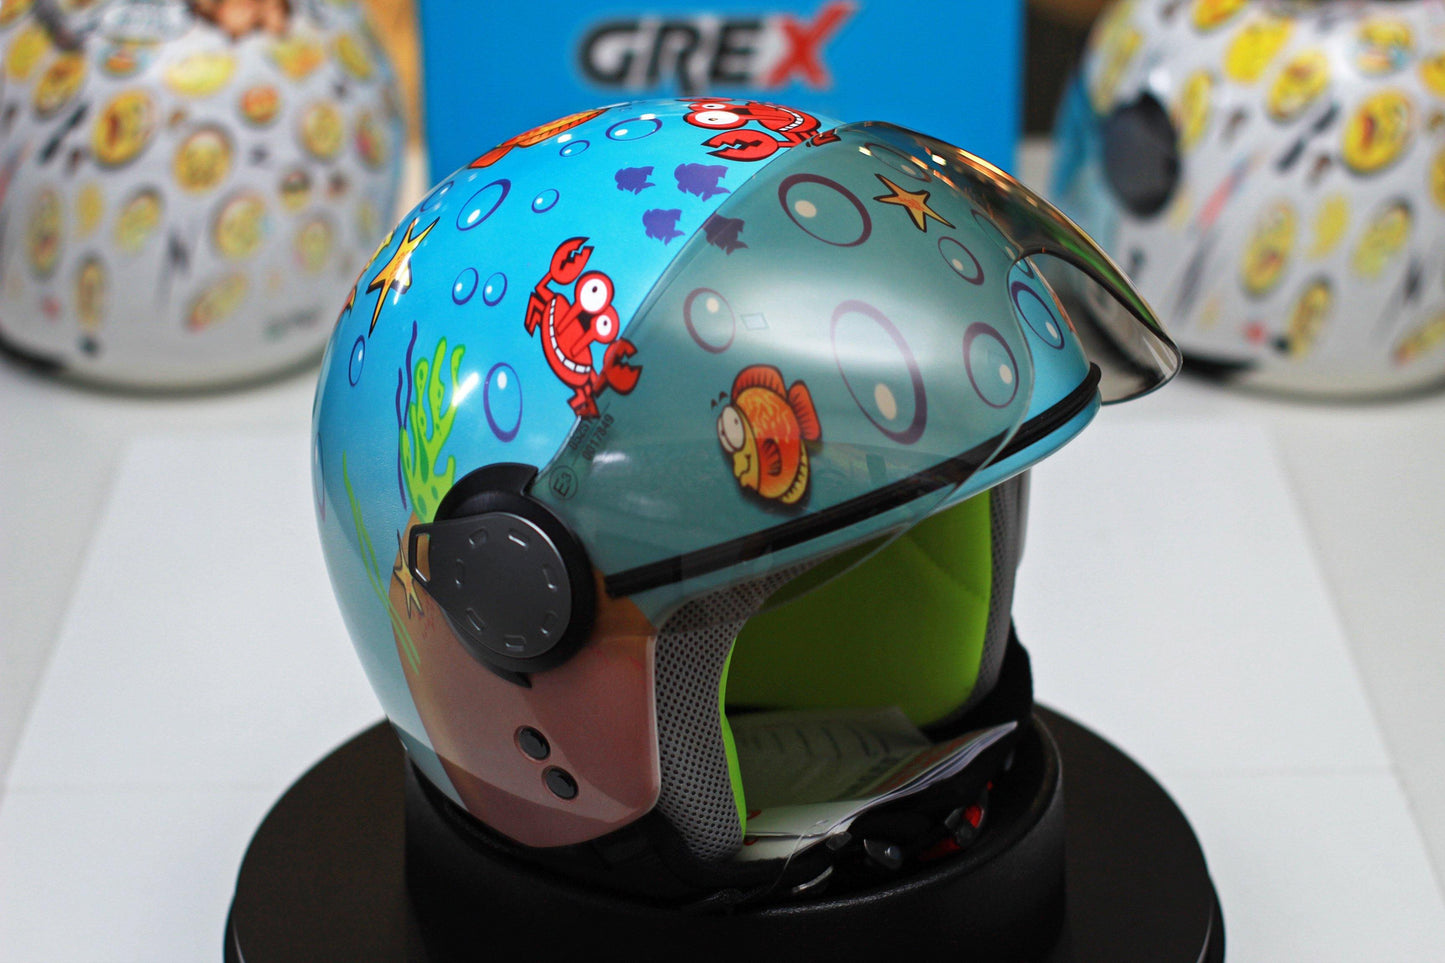 Grex G1.1 Fancy (22 Aquarium) - Durian Bikers